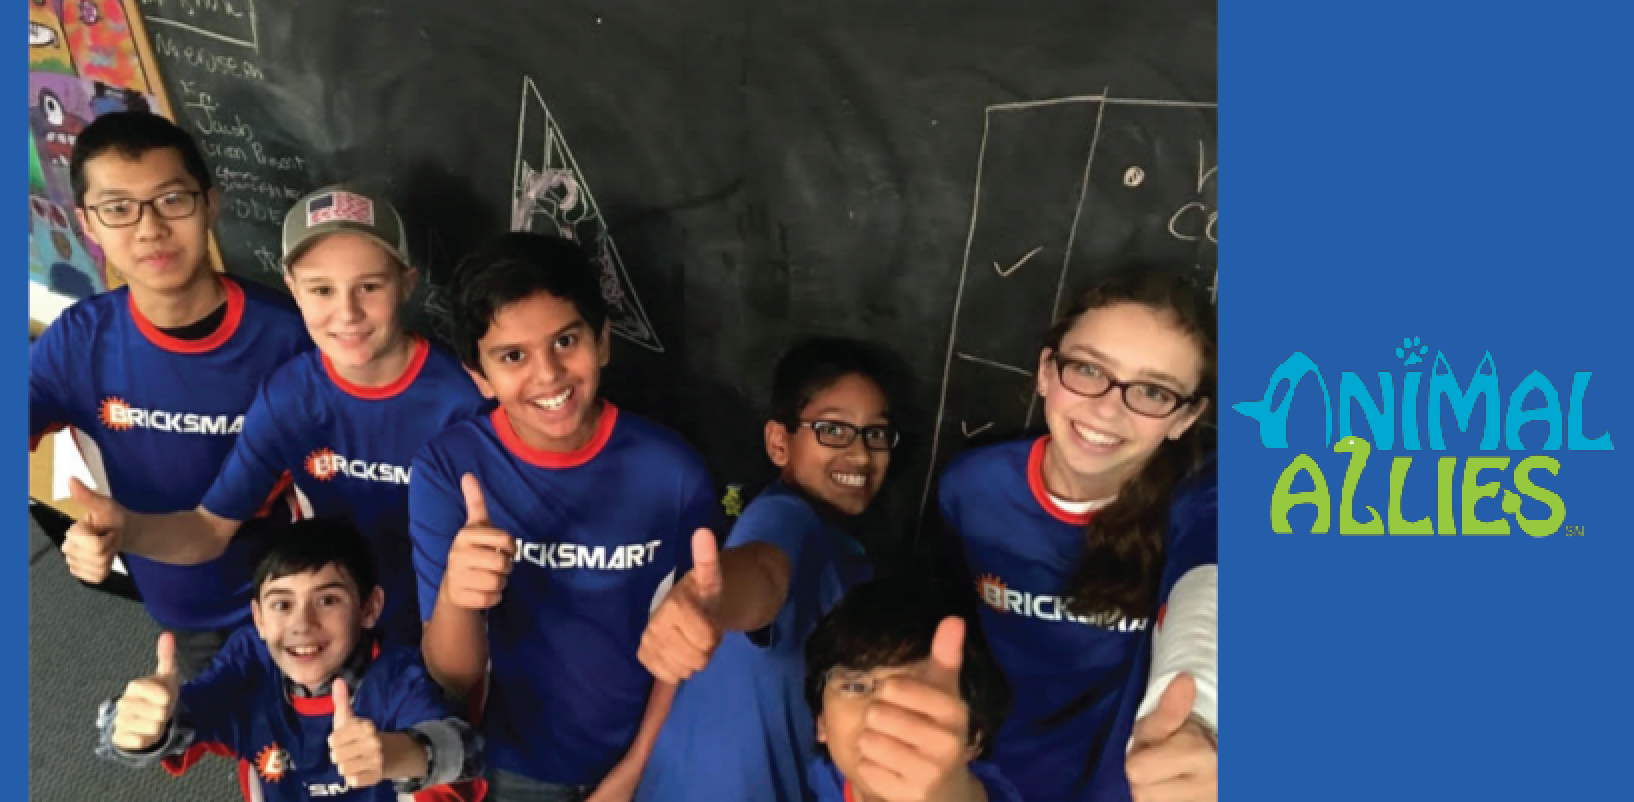 'Bricksmart' team of kids in matching blue t-shirts 